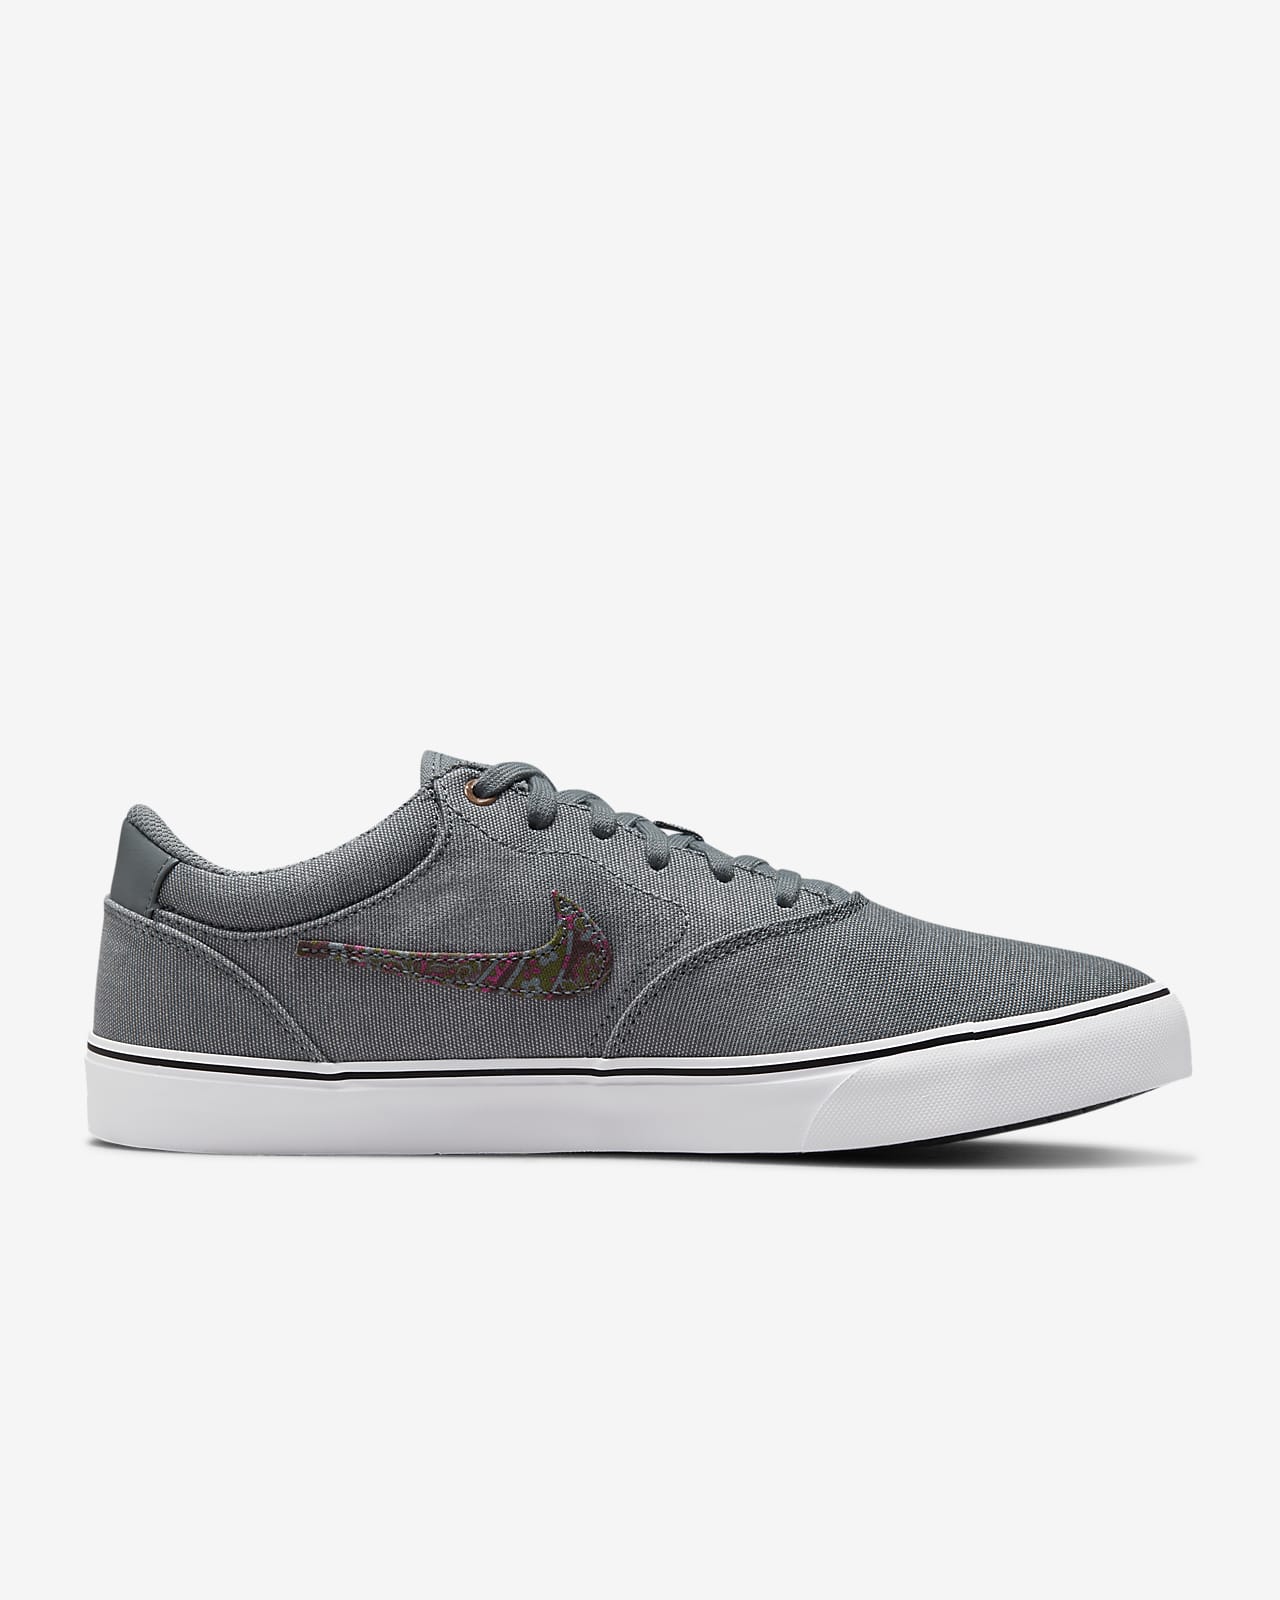 Nike SB Chron gray nike sb shoes 2 Canvas Premium Skate Shoes